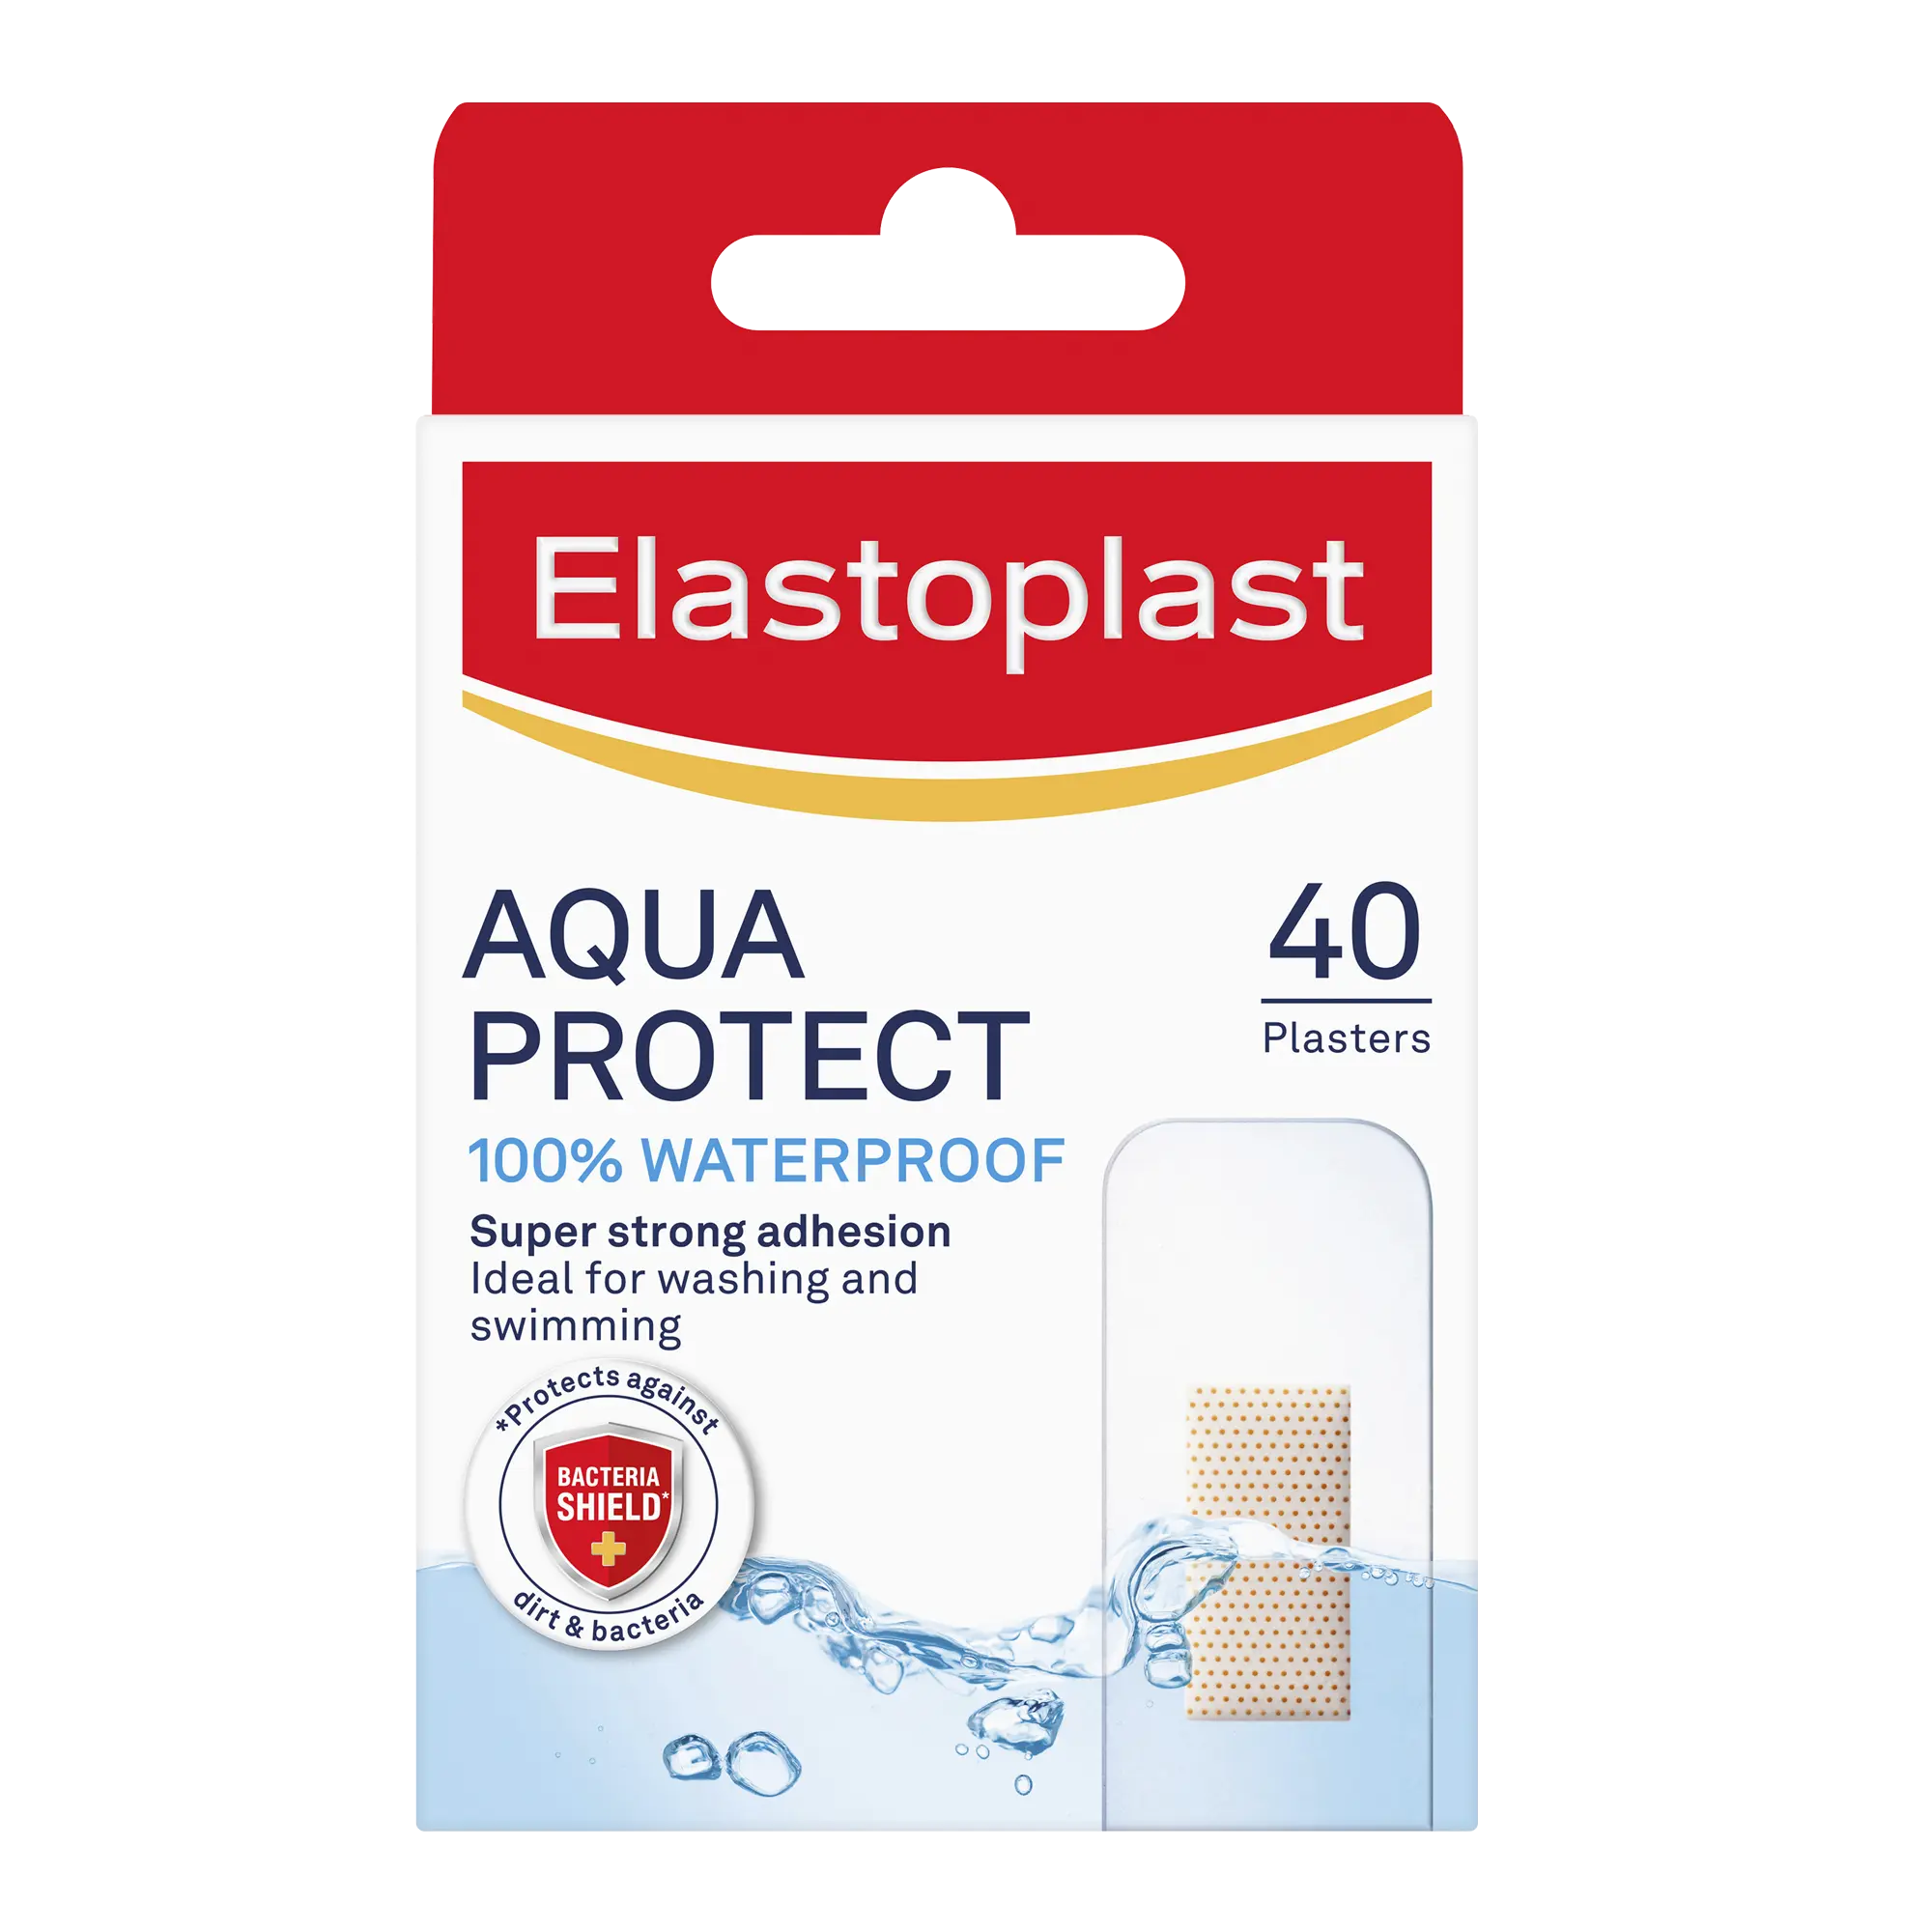 Buy Elastoplast 21100 Non-Stick Wound Dressing 7.5cm x 5cm 5 Pack